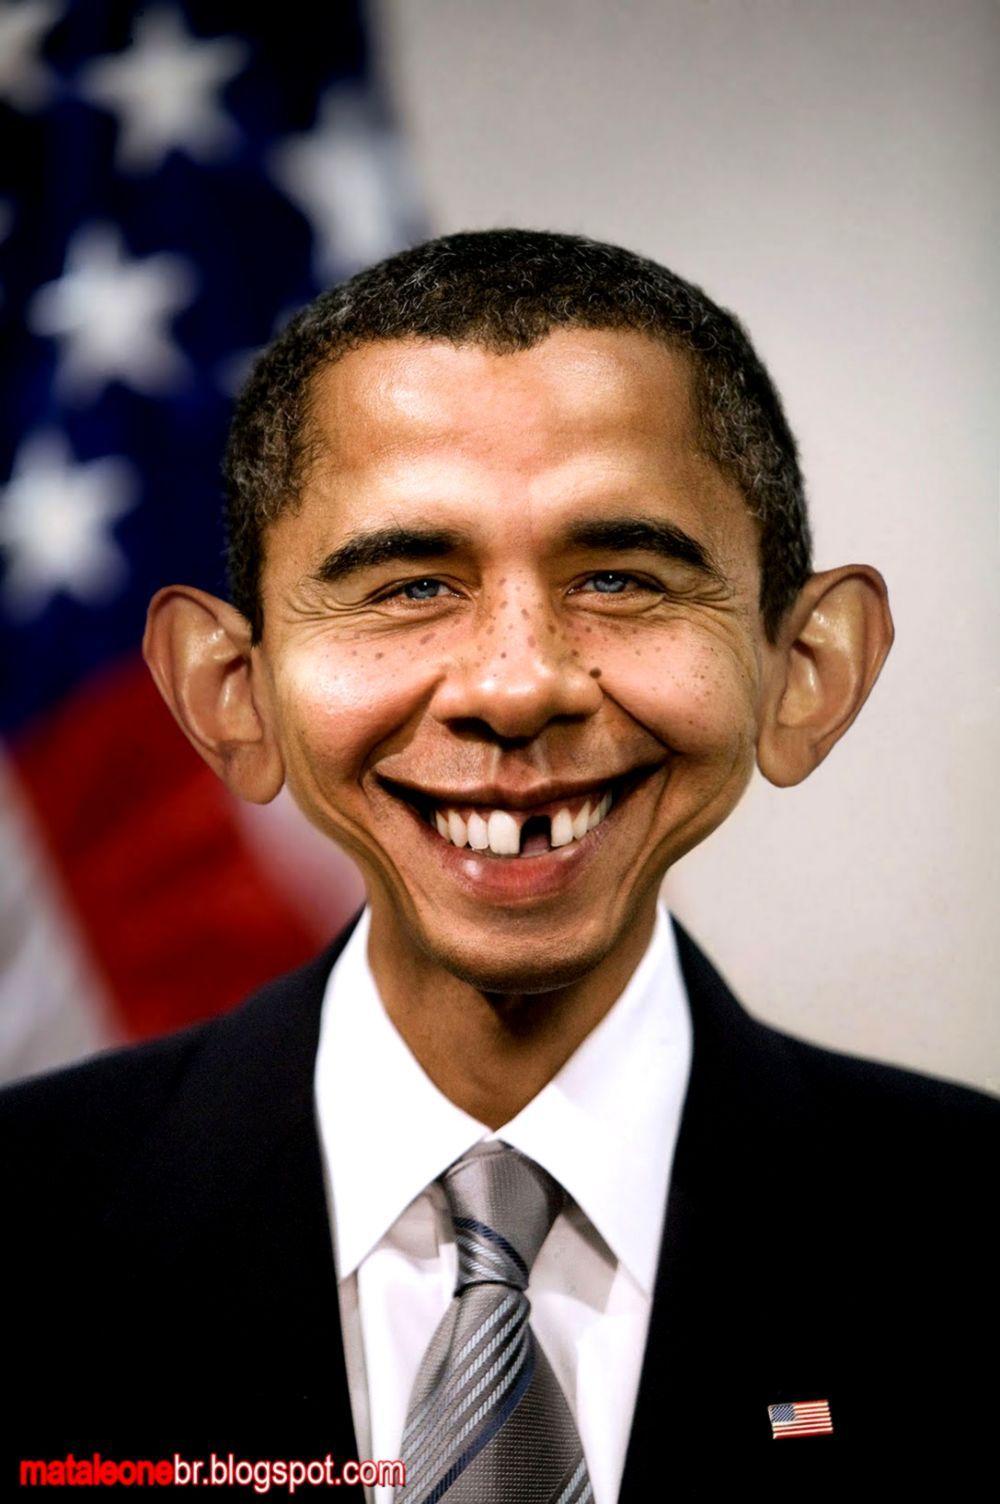 Funny Image Of Barack Obama